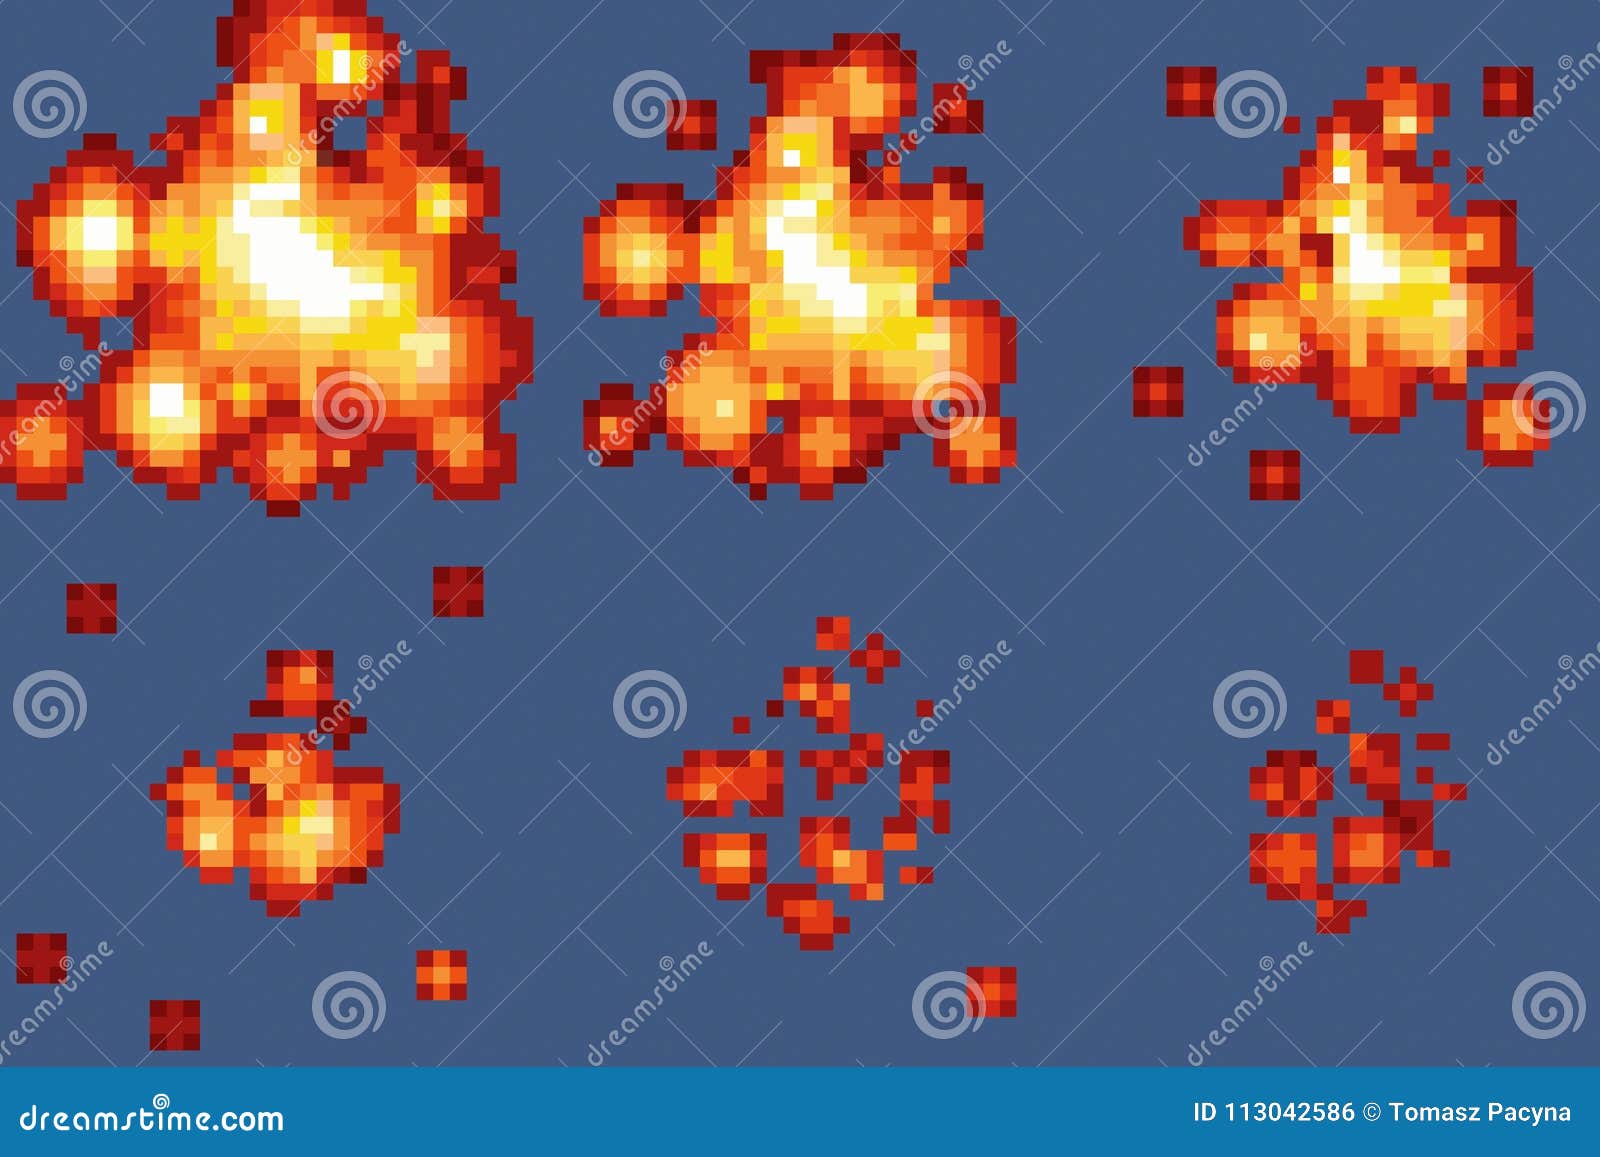 8-Bit Pixel-art Explosion Animation Frames Stock Vector - Illustration of  explosion, vector: 113042586